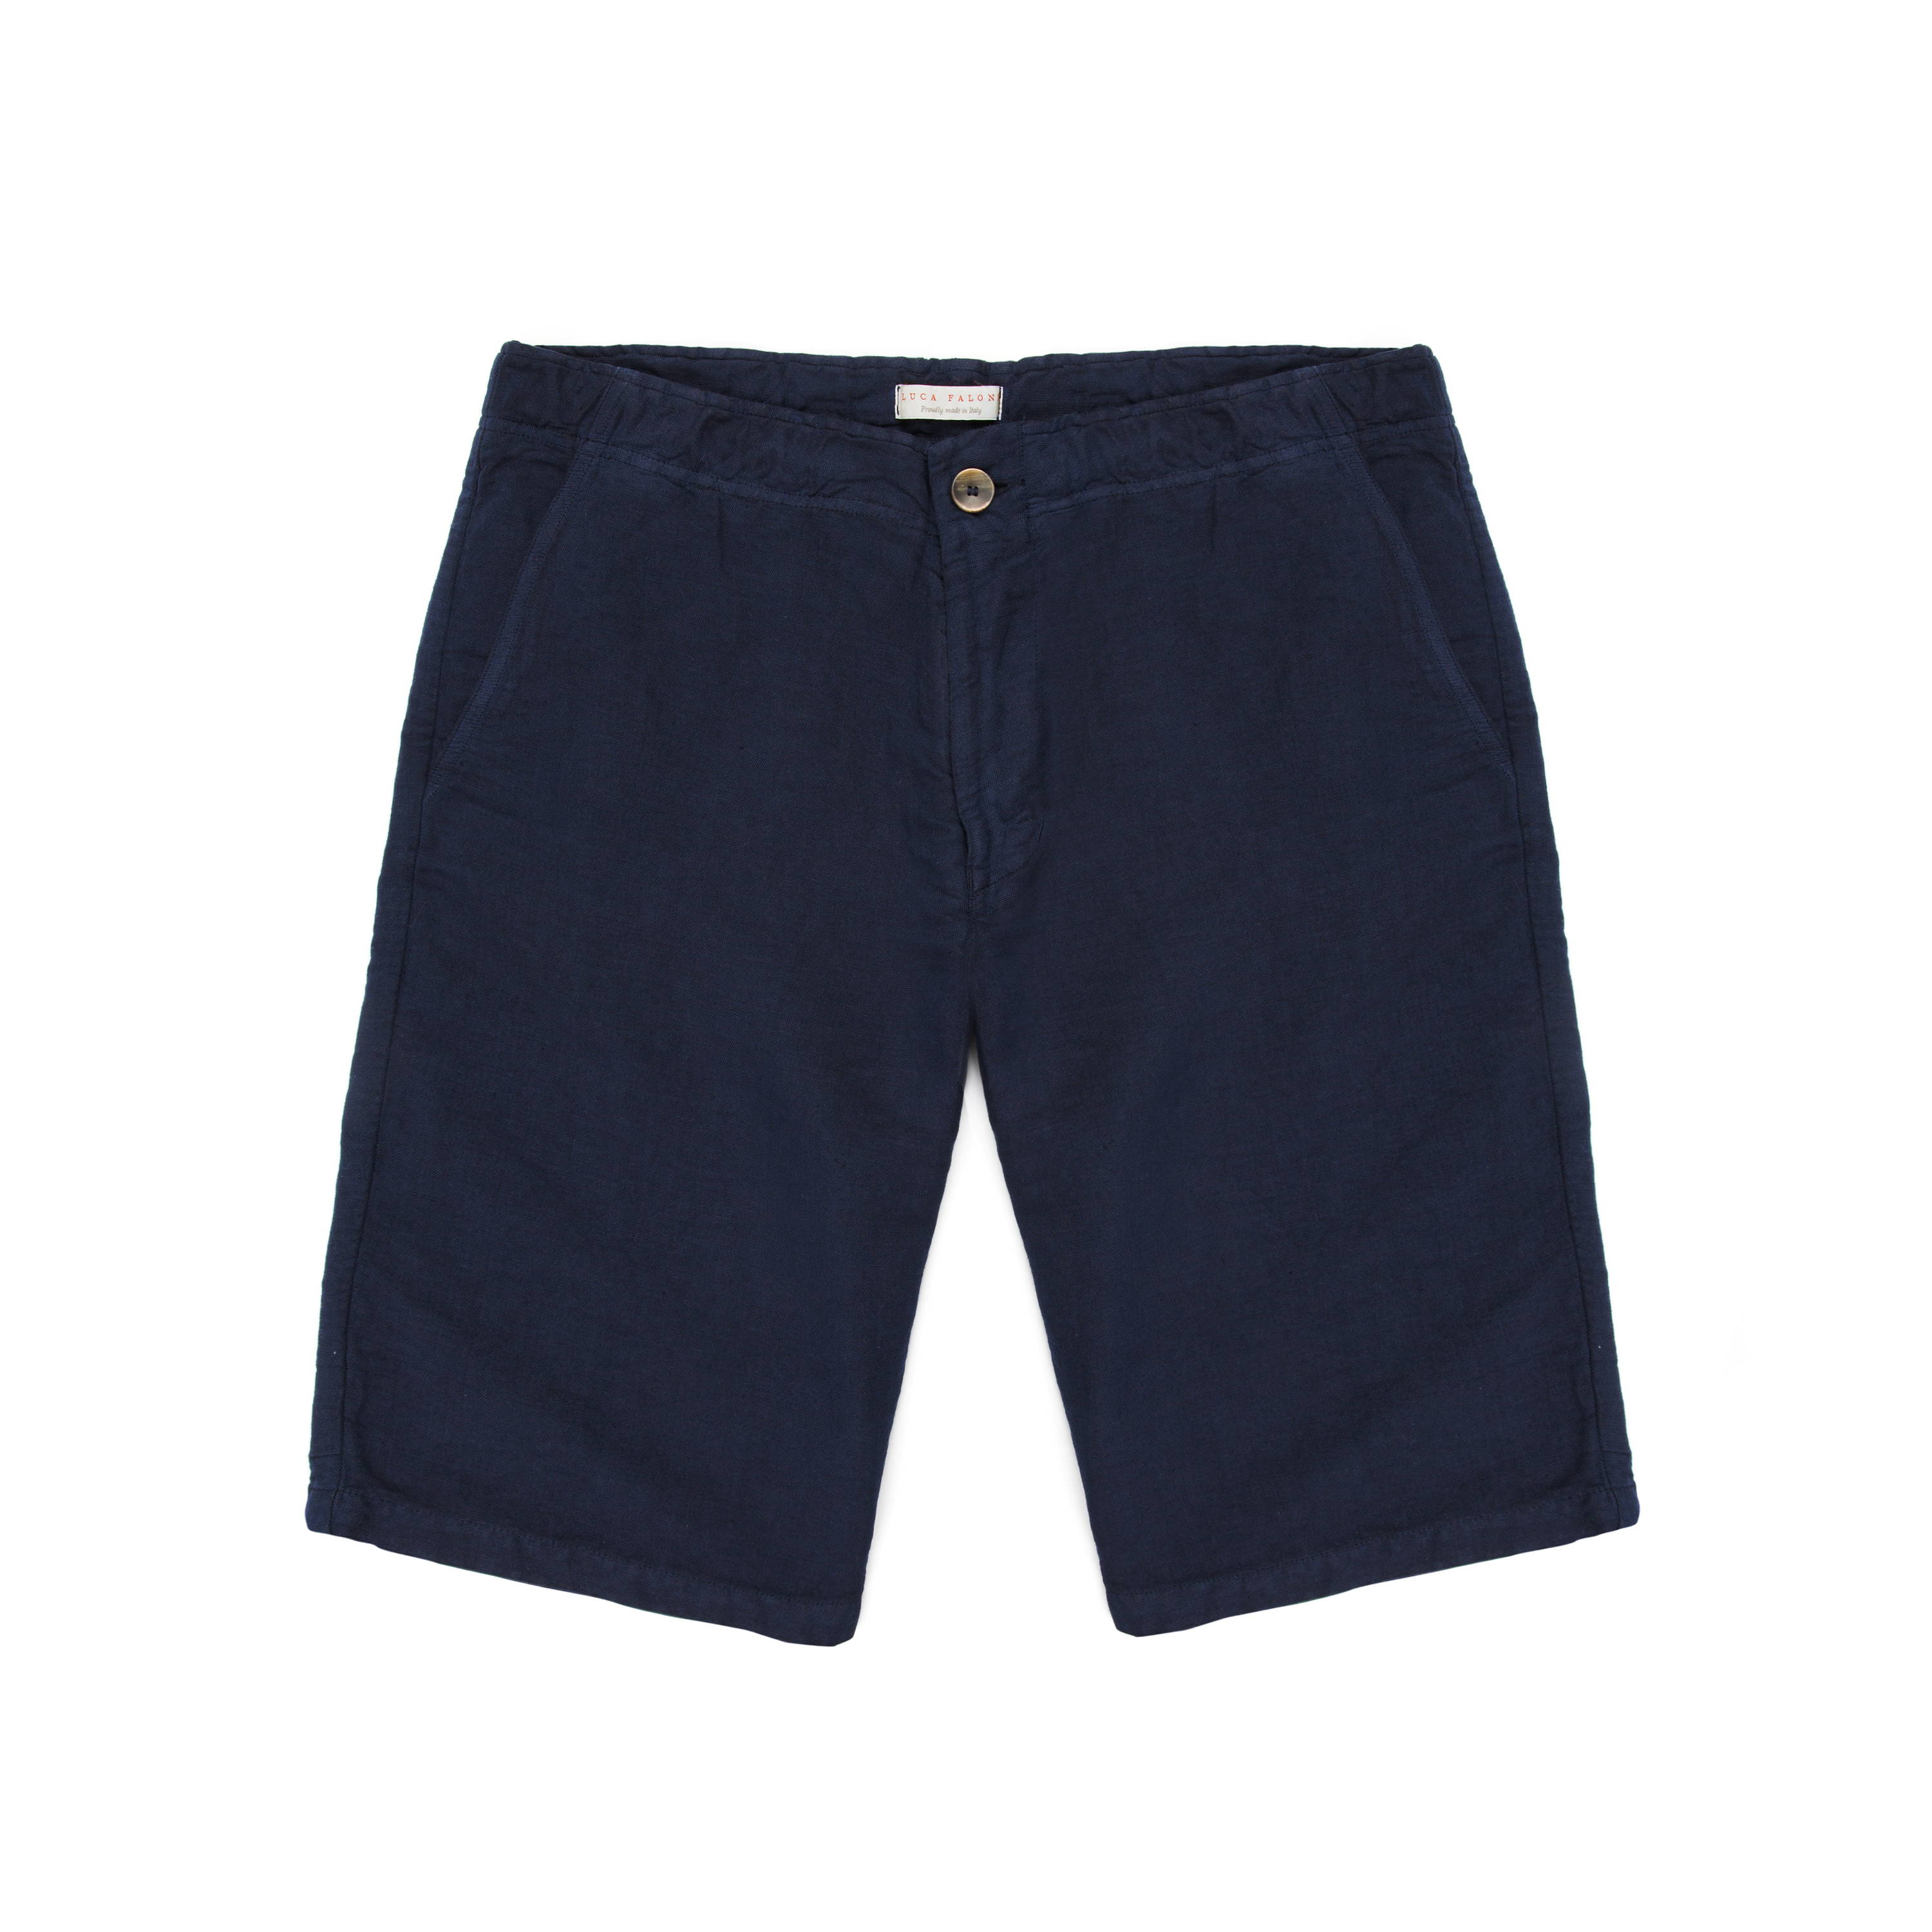 Luca Faloni Navy Blue Panarea Linen Shorts Made in Italy